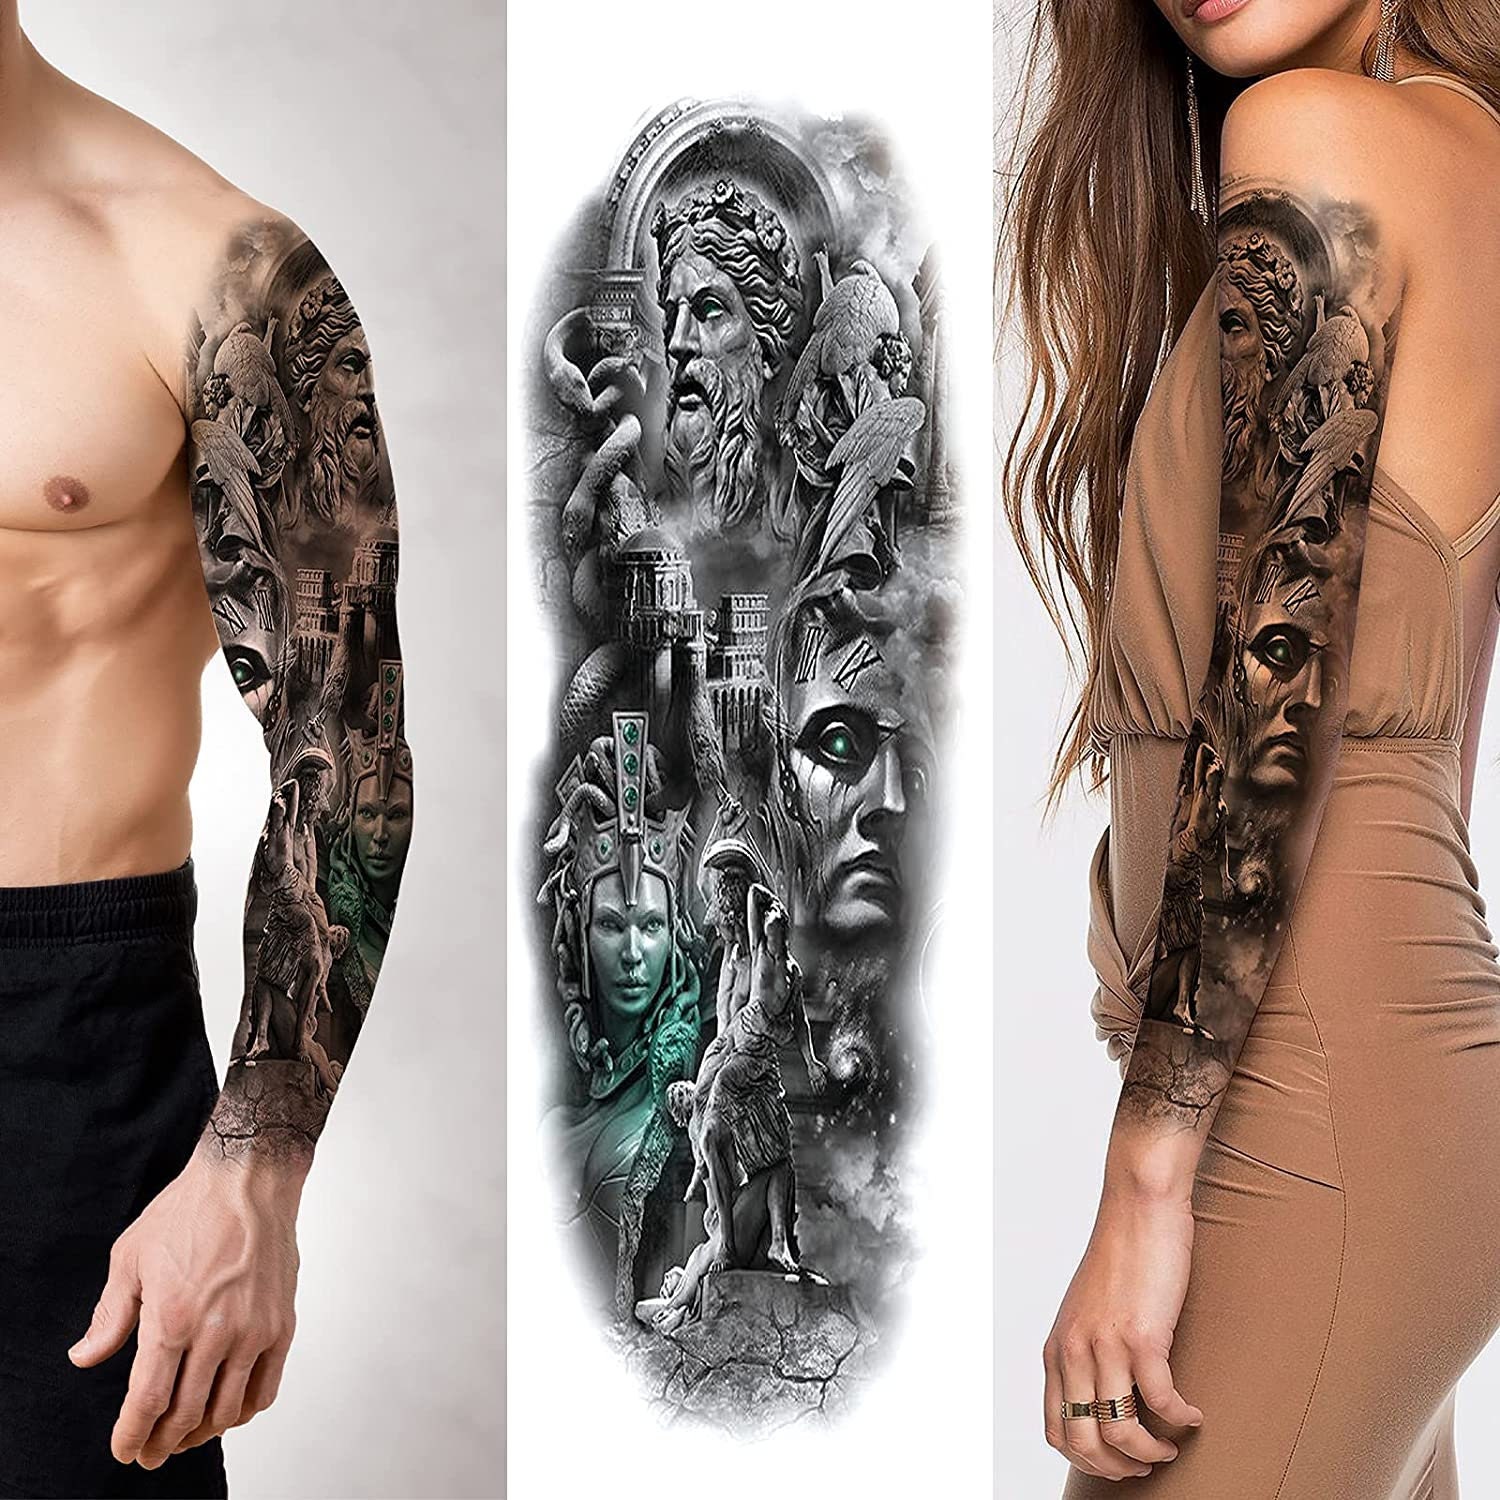 Lord Shiva Tattoos: An Artistic Representation of Cosmic Energy